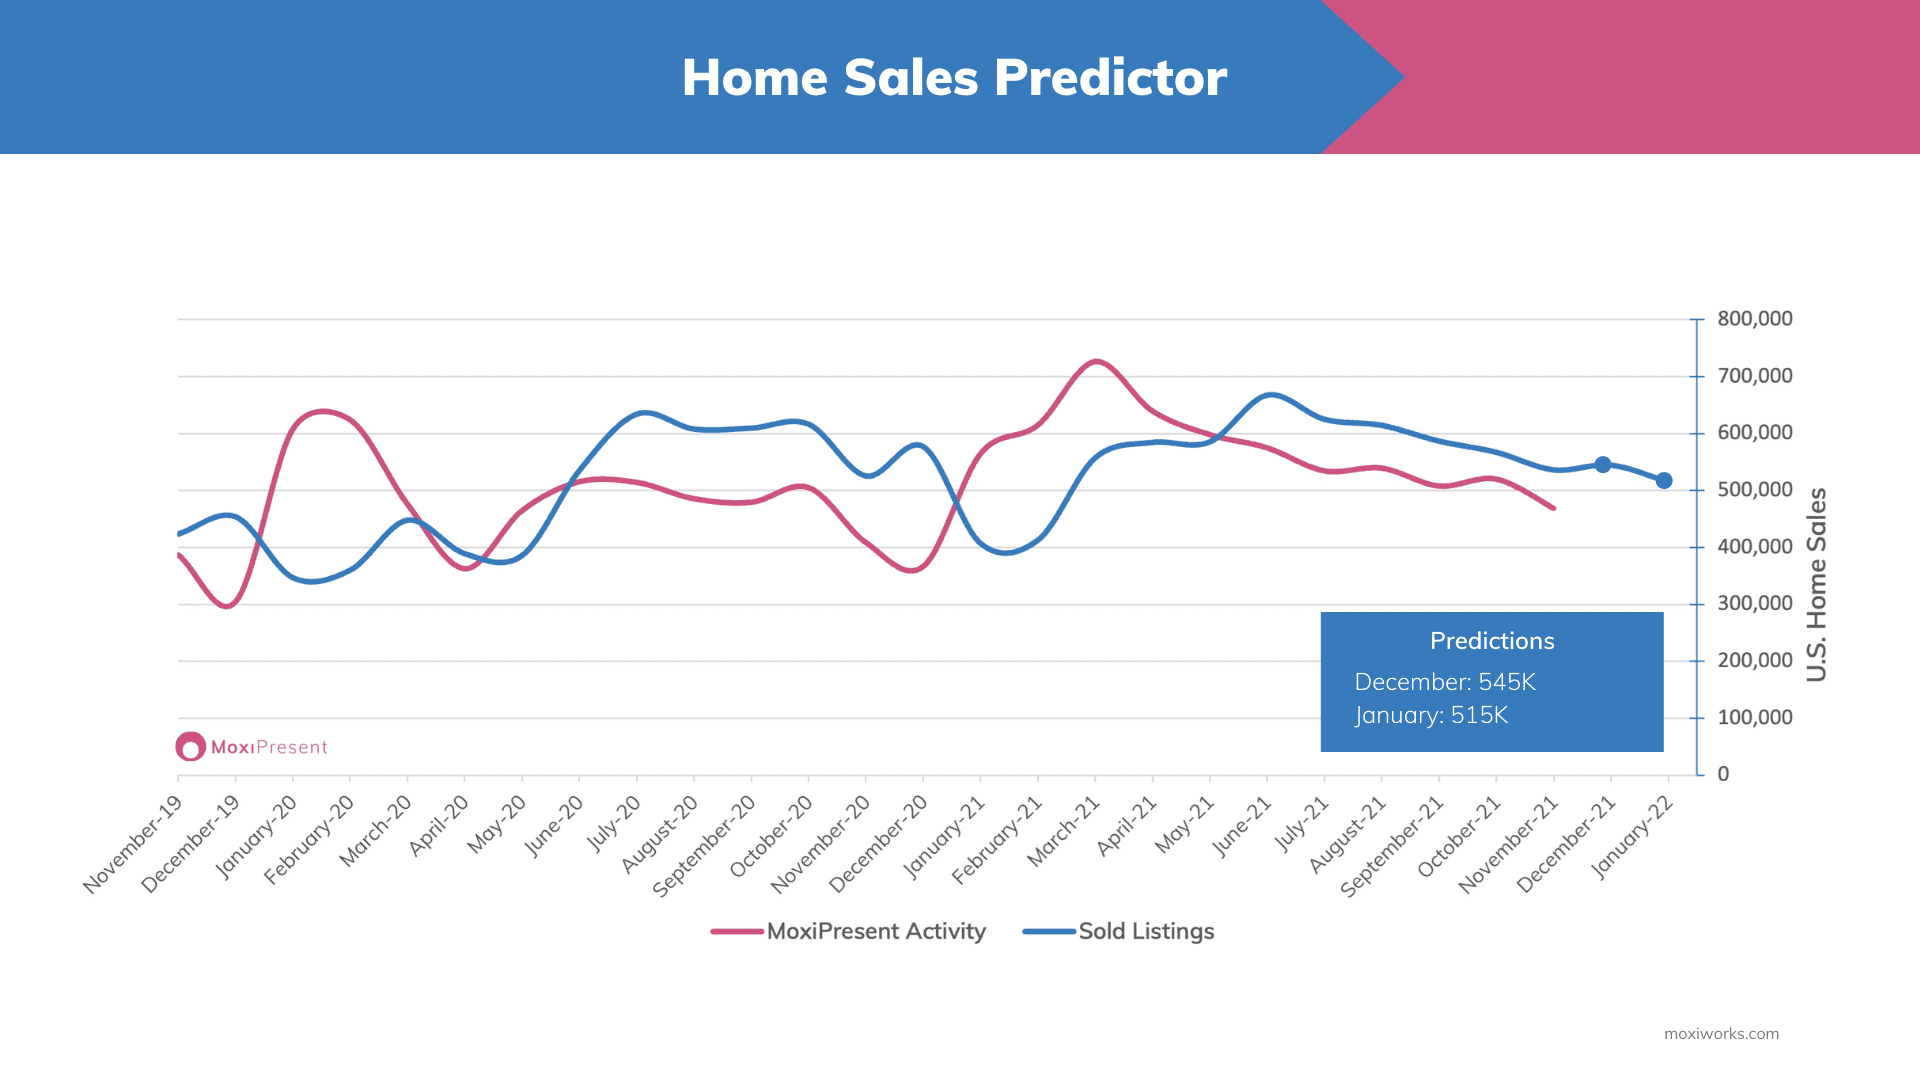 MoxiWorks Home Sales Predictor Dec 2021